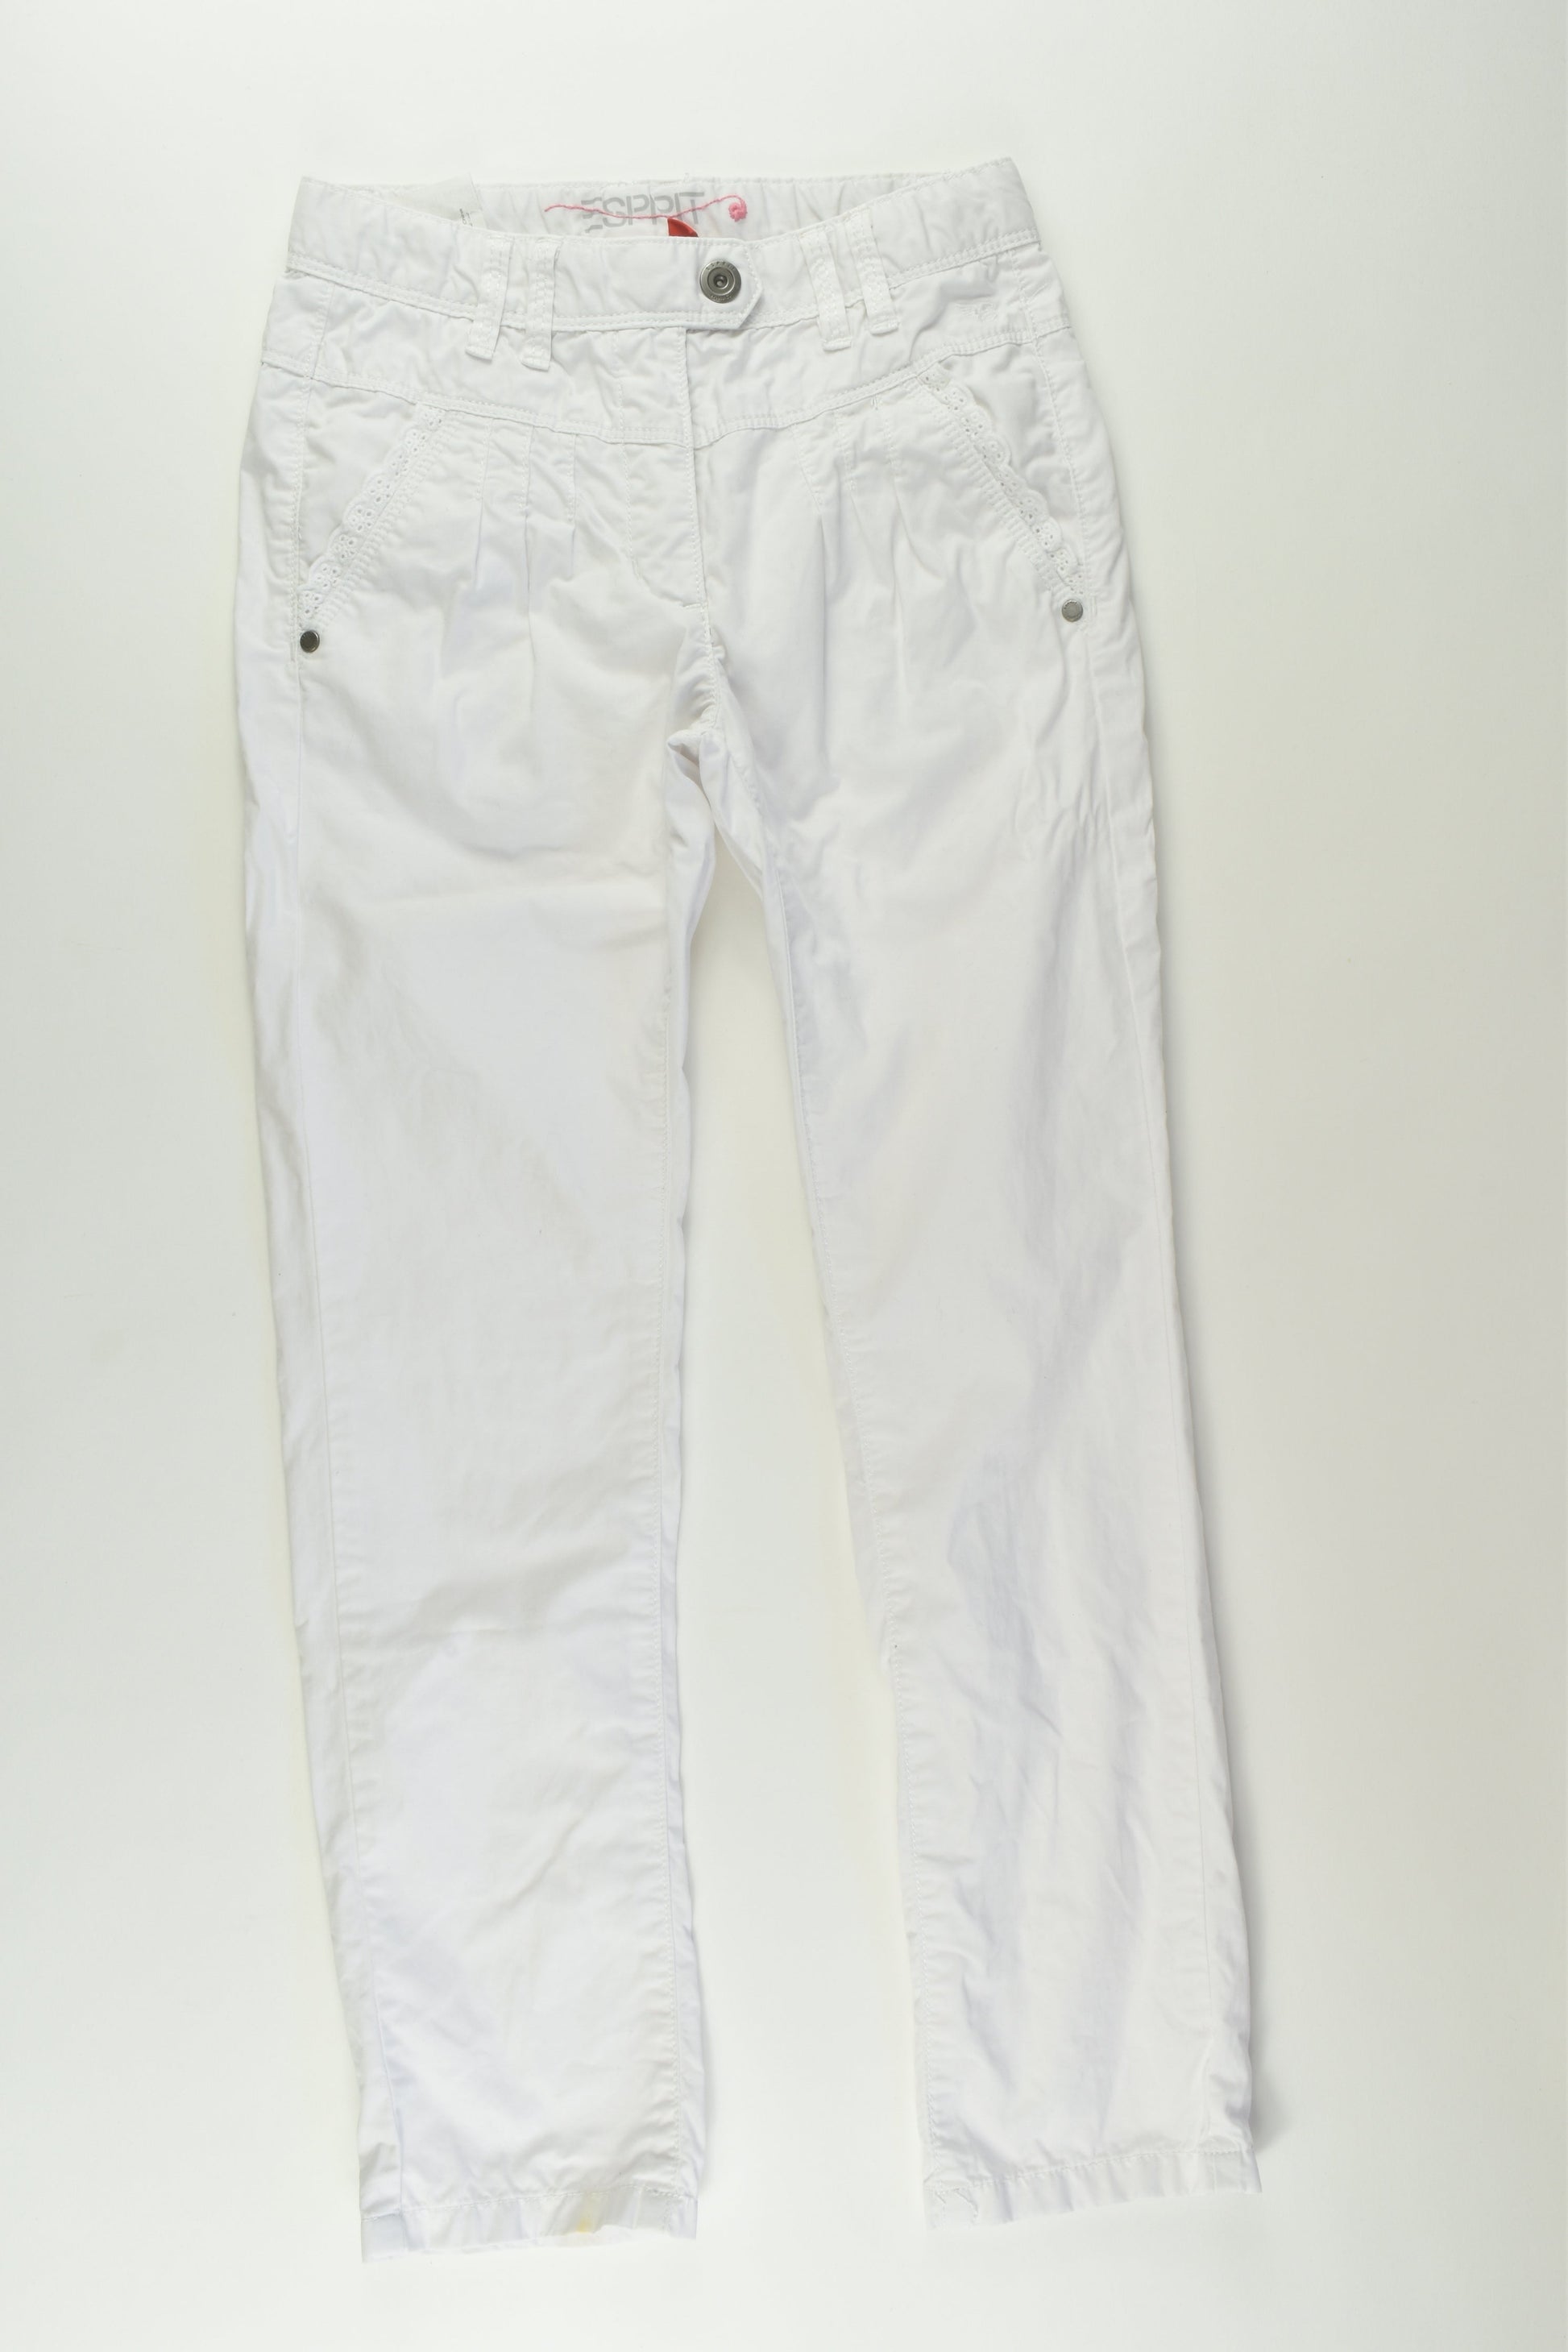 Esprit Size 7 White Lightweight Pants